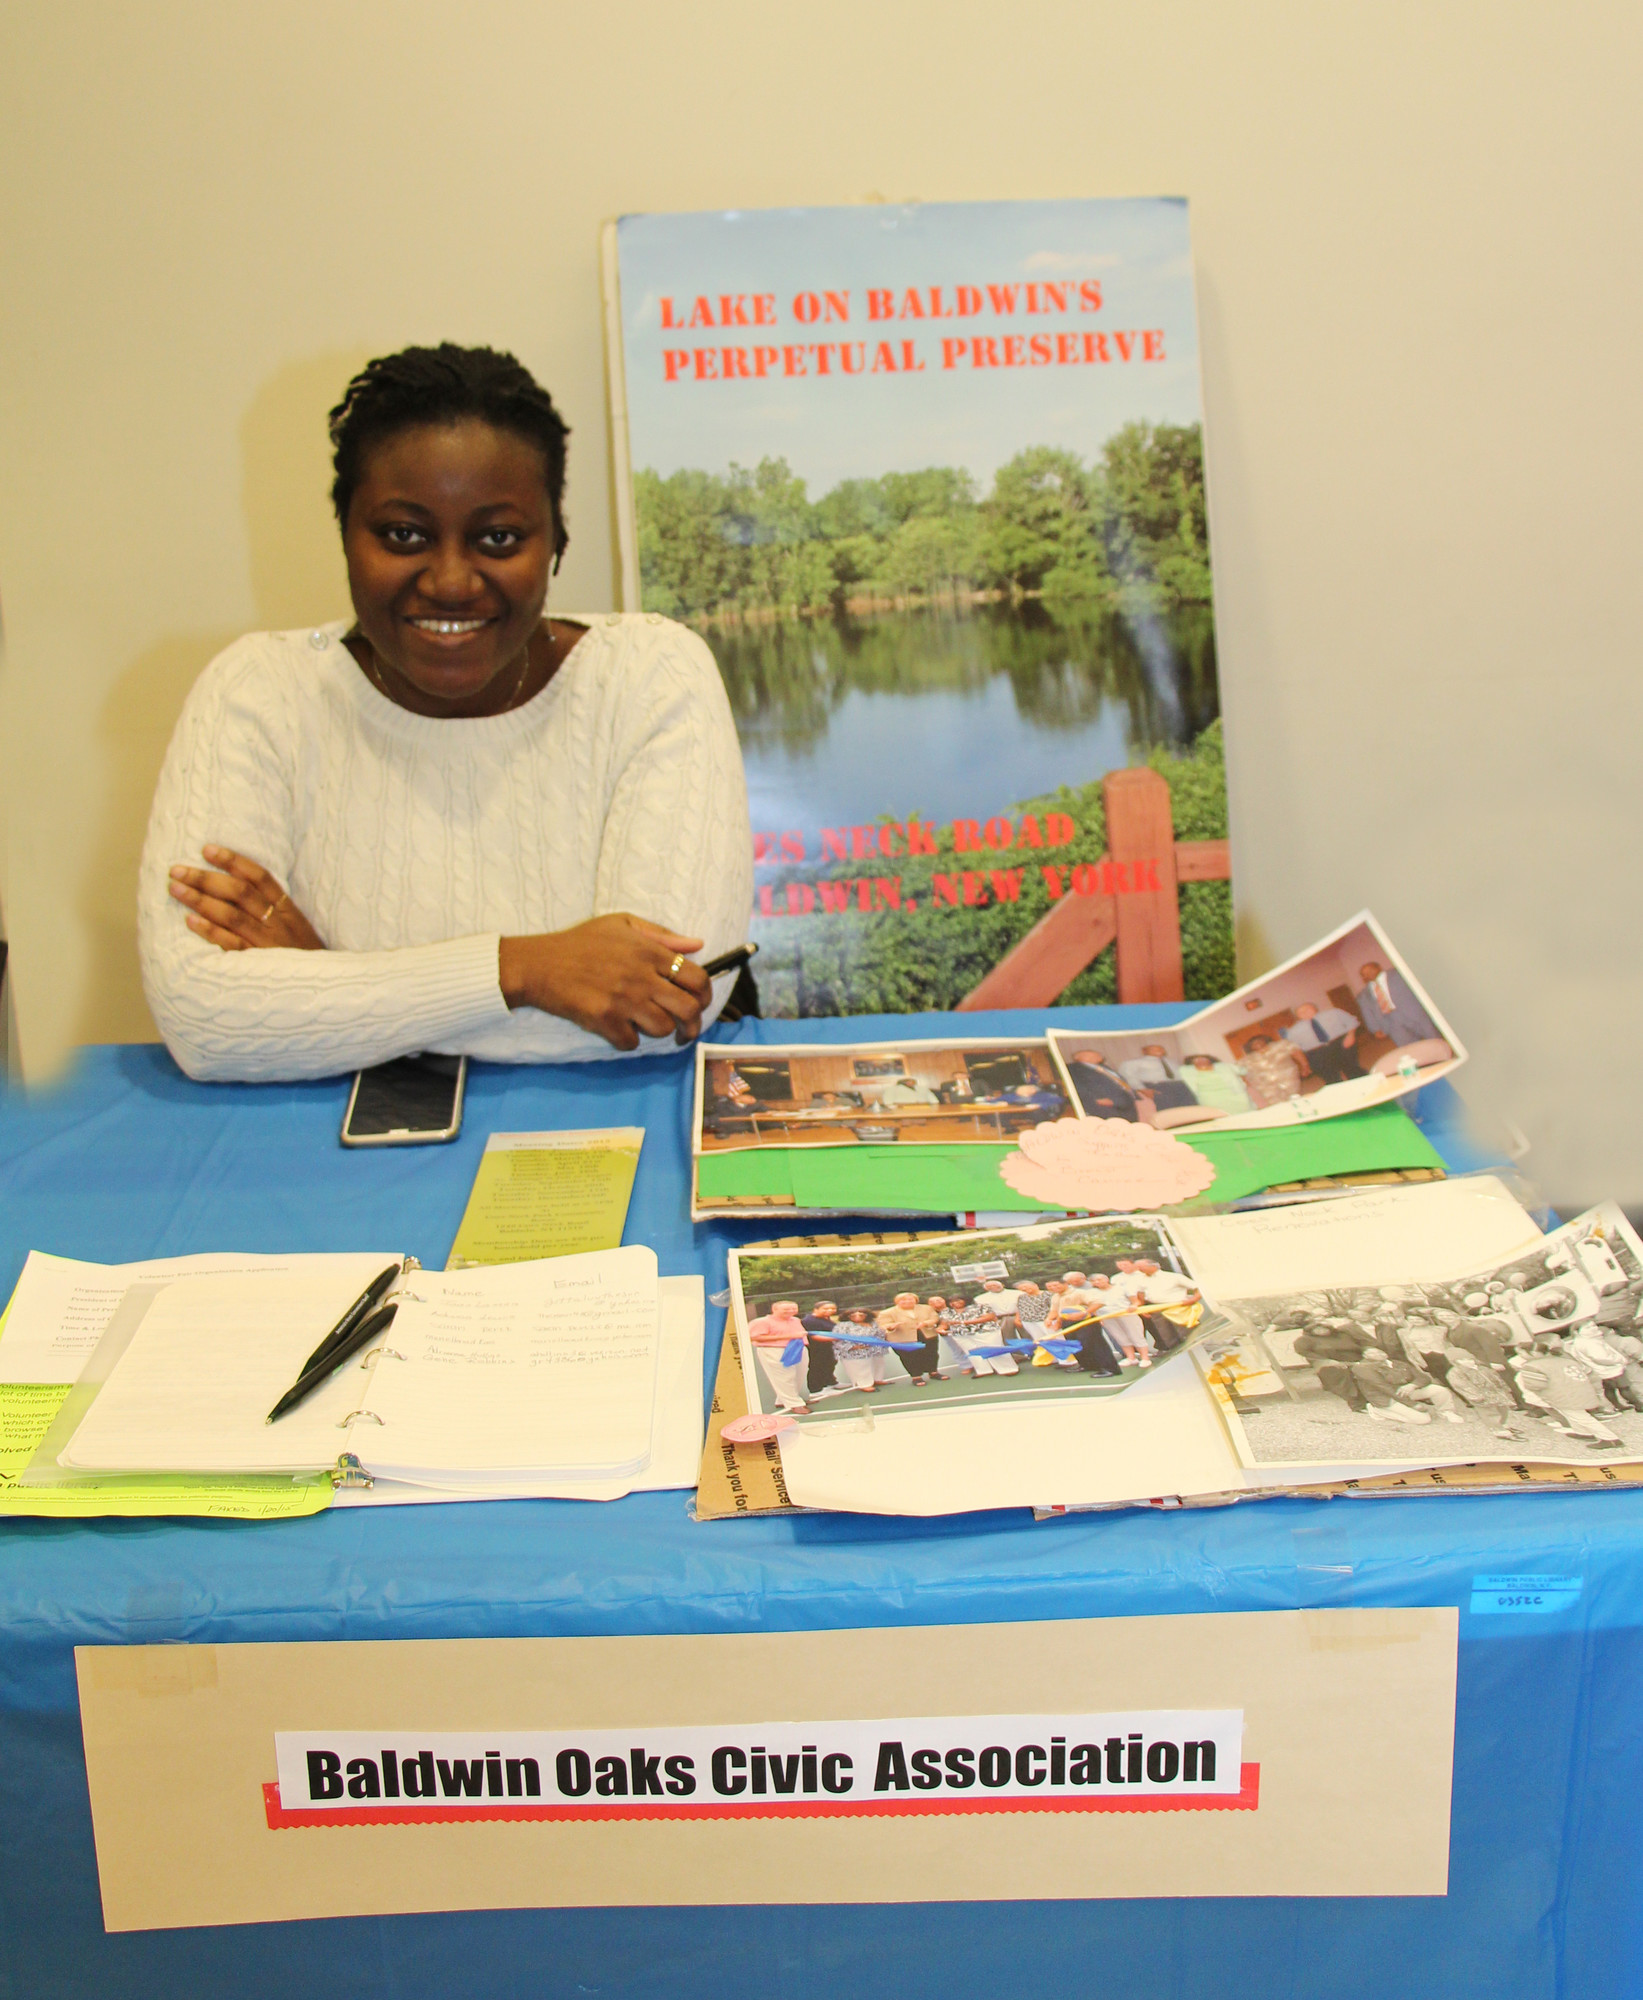 Kamilah Clahoar, recording secretary of the Baldwin Oaks Civic Association, had a colorful display set up.